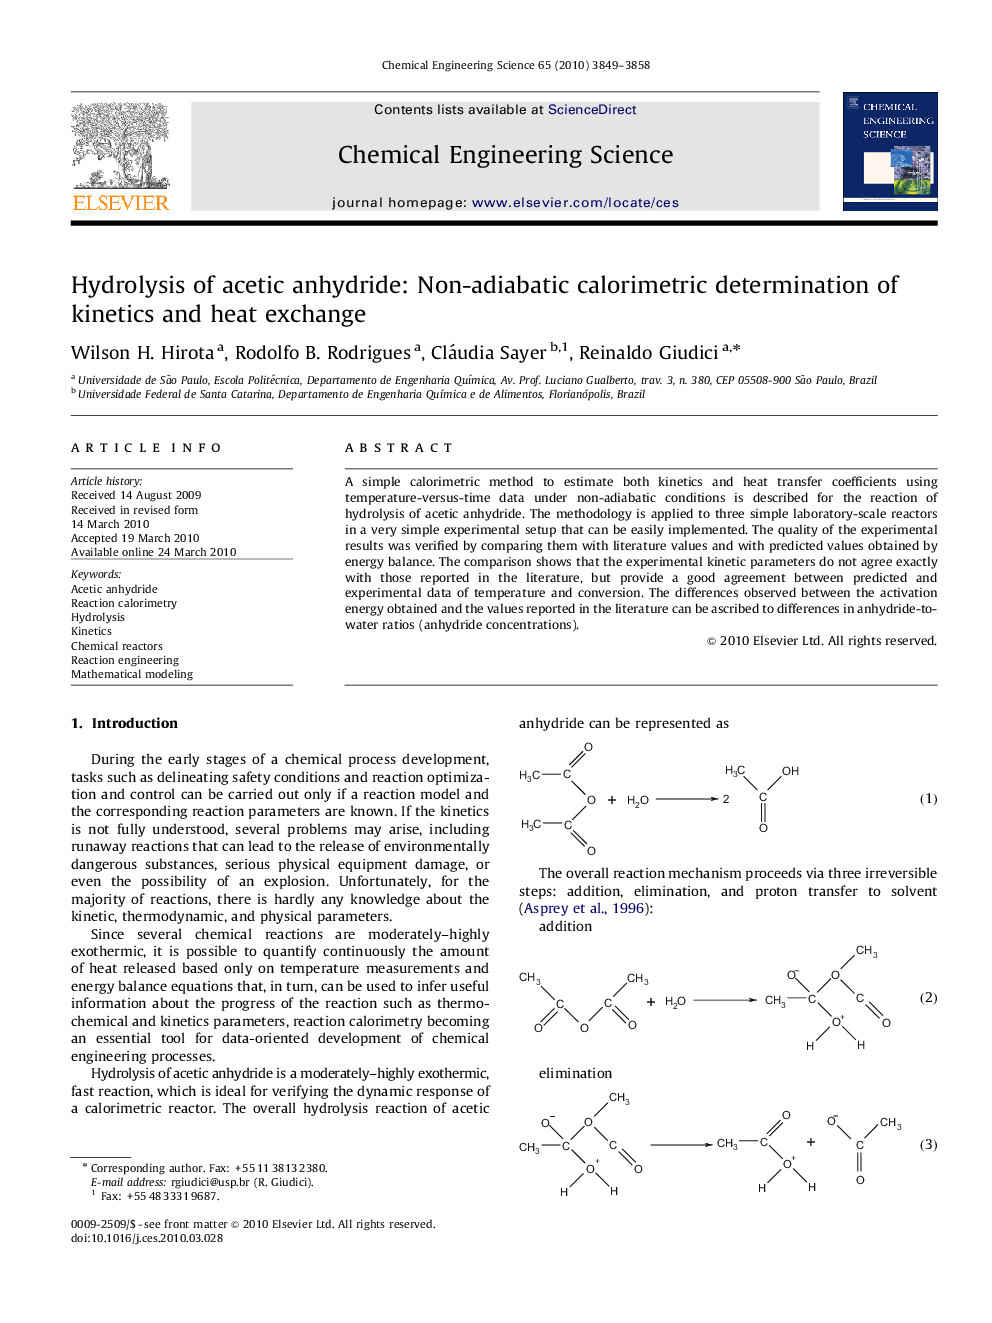 Hydrolysis of acetic anhydride: Non-adiabatic calorimetric determination of kinetics and heat exchange